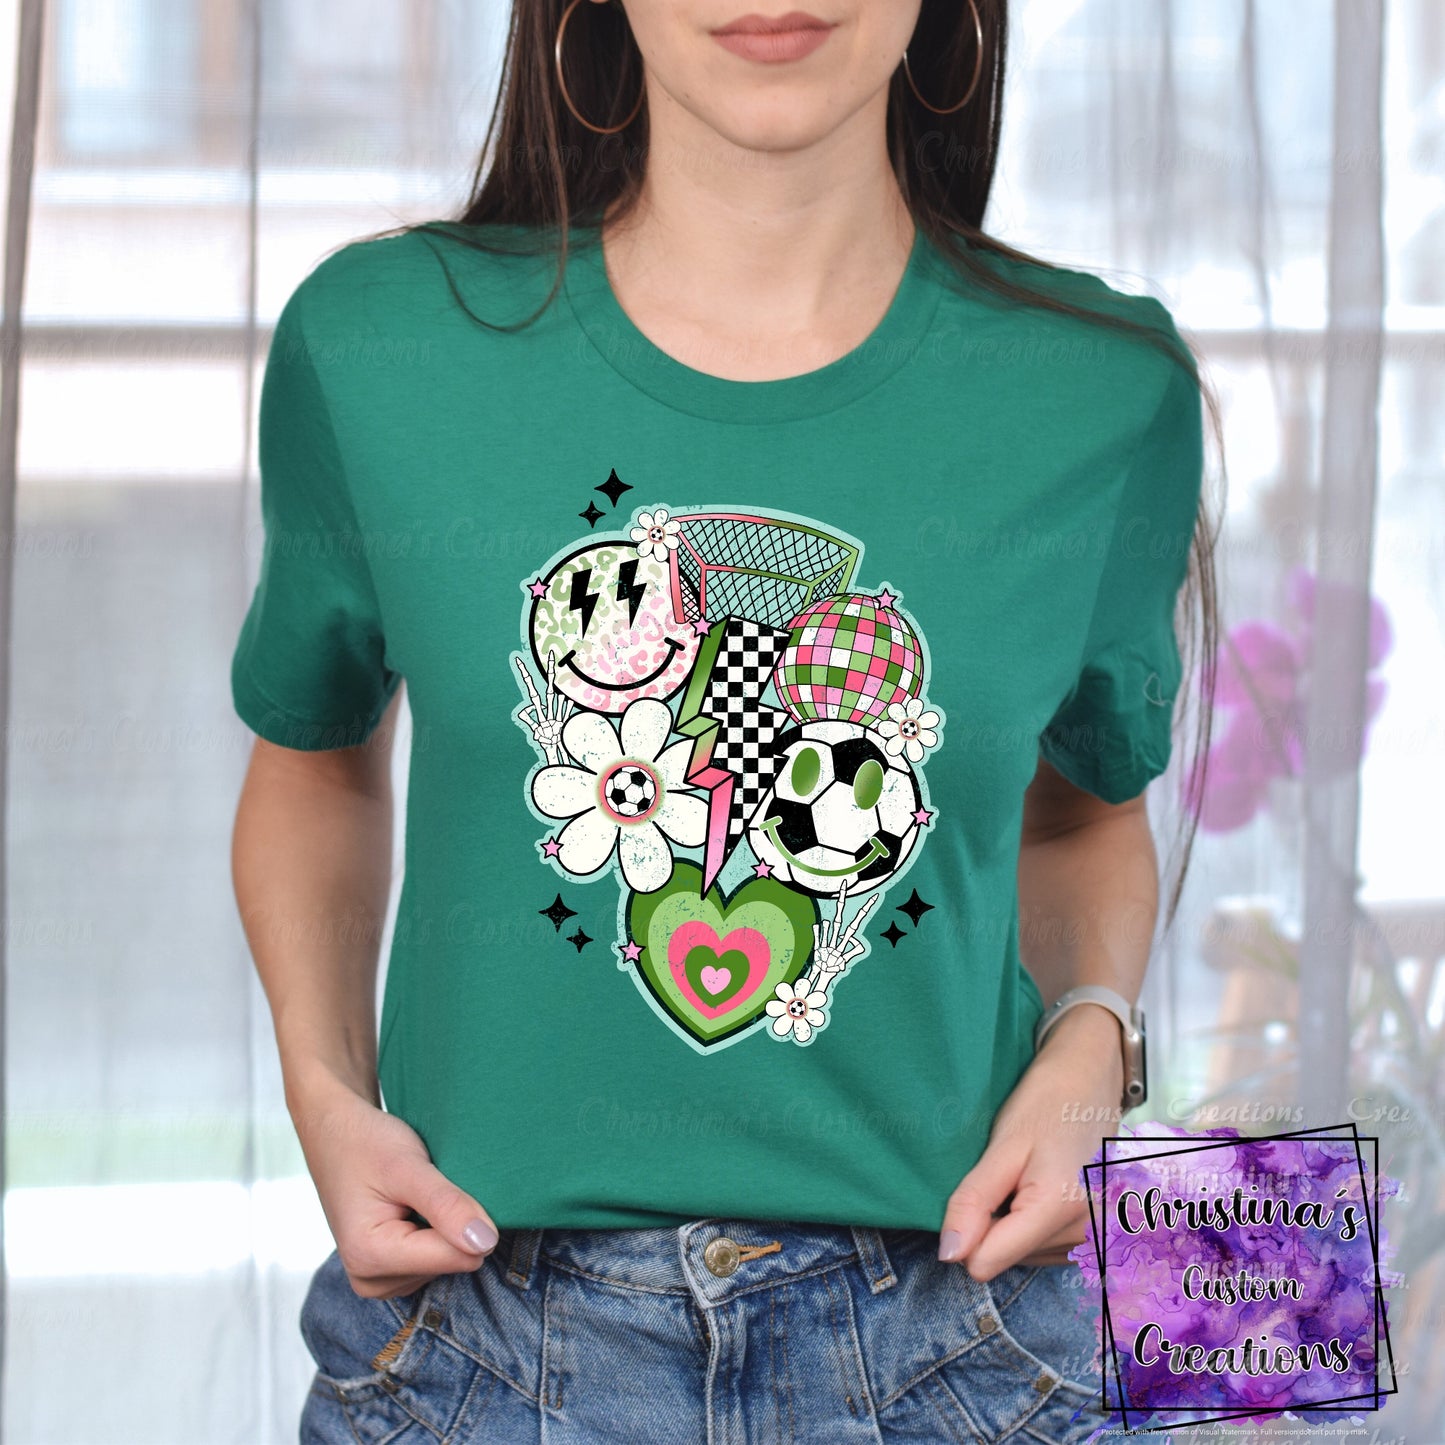 Retro Soccer T-Shirt | Trendy Soccer Shirt | Fast Shipping | Super Soft Shirts for Men/Women/Kid's | Bella Canvas